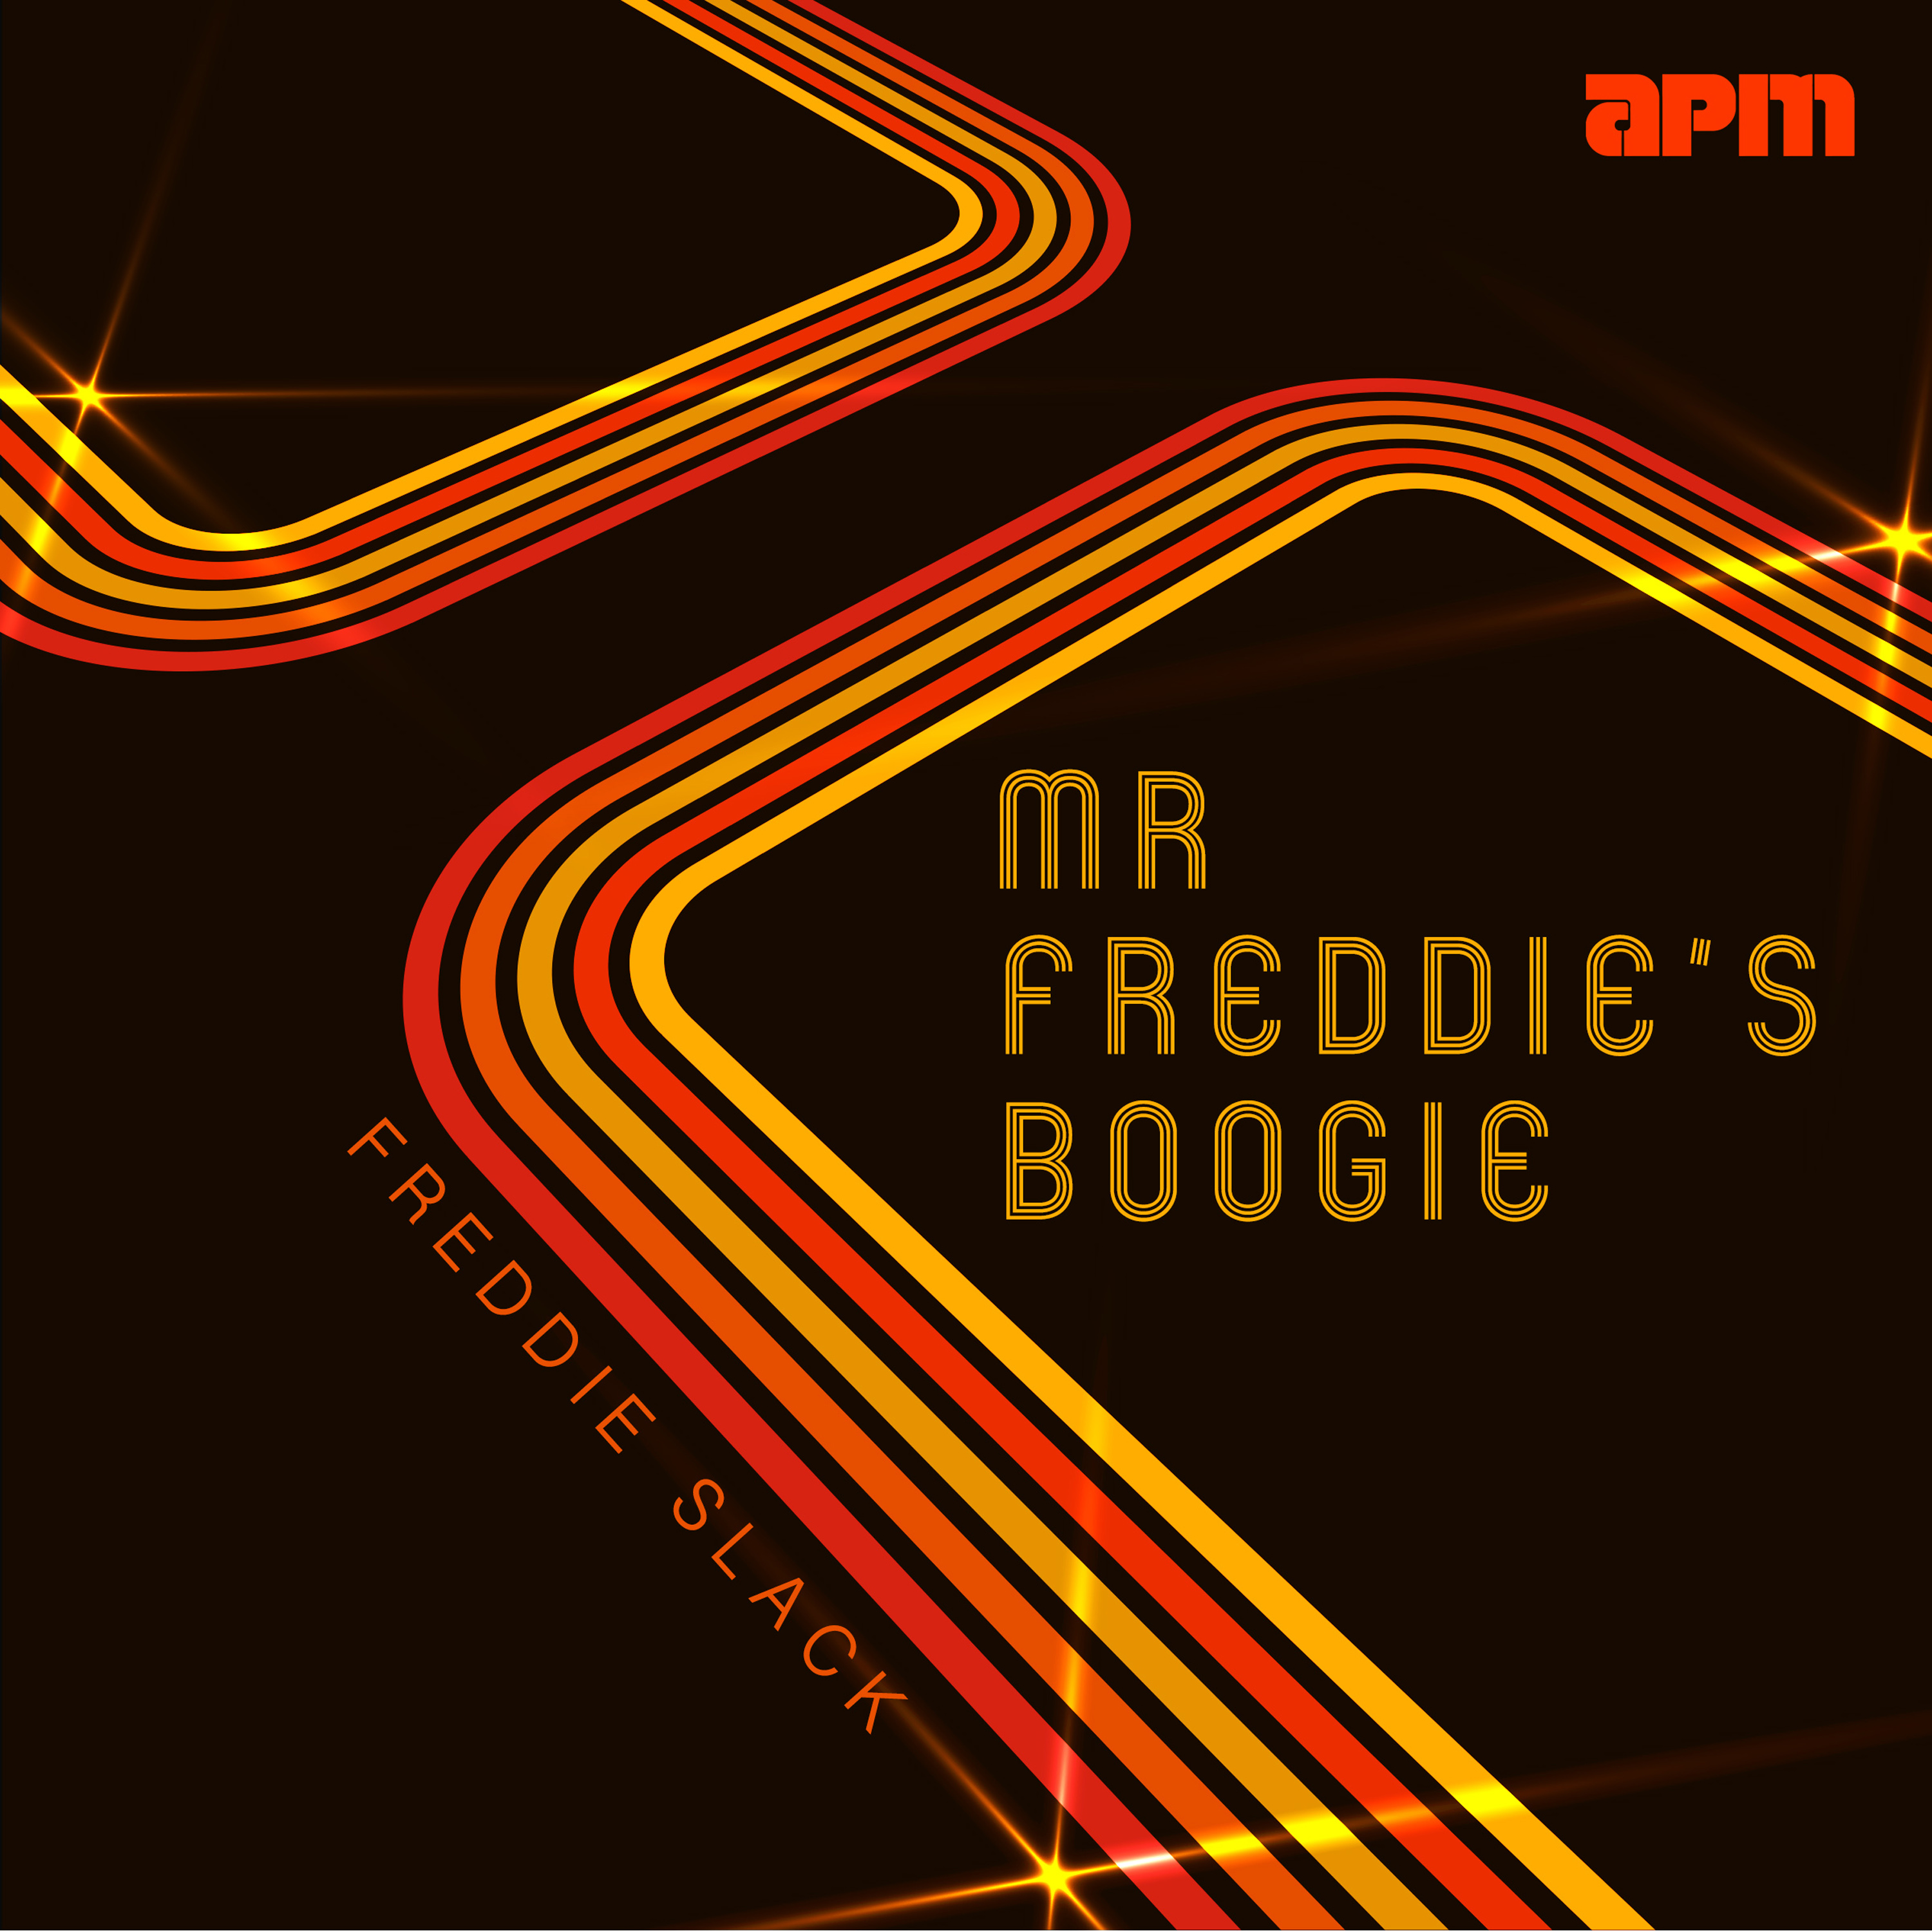 Mr Freddie's Boogie